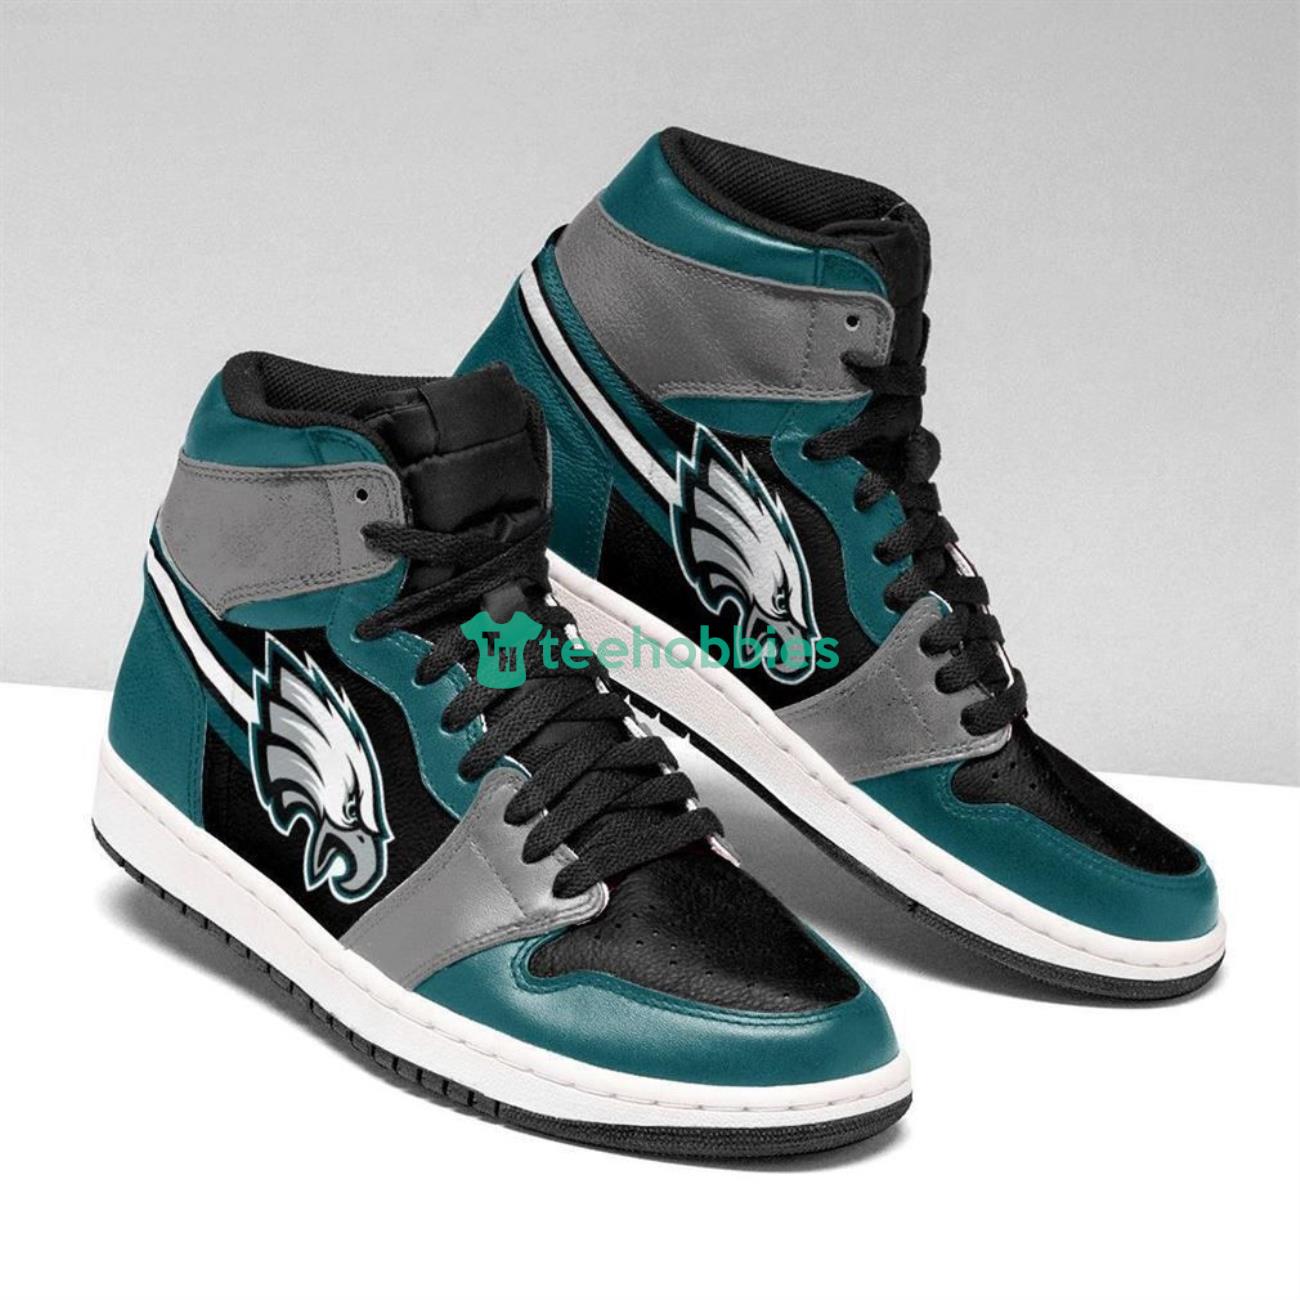 Philadelphia Eagles Fans Air Jordan Hightop Shoes Product Photo 1